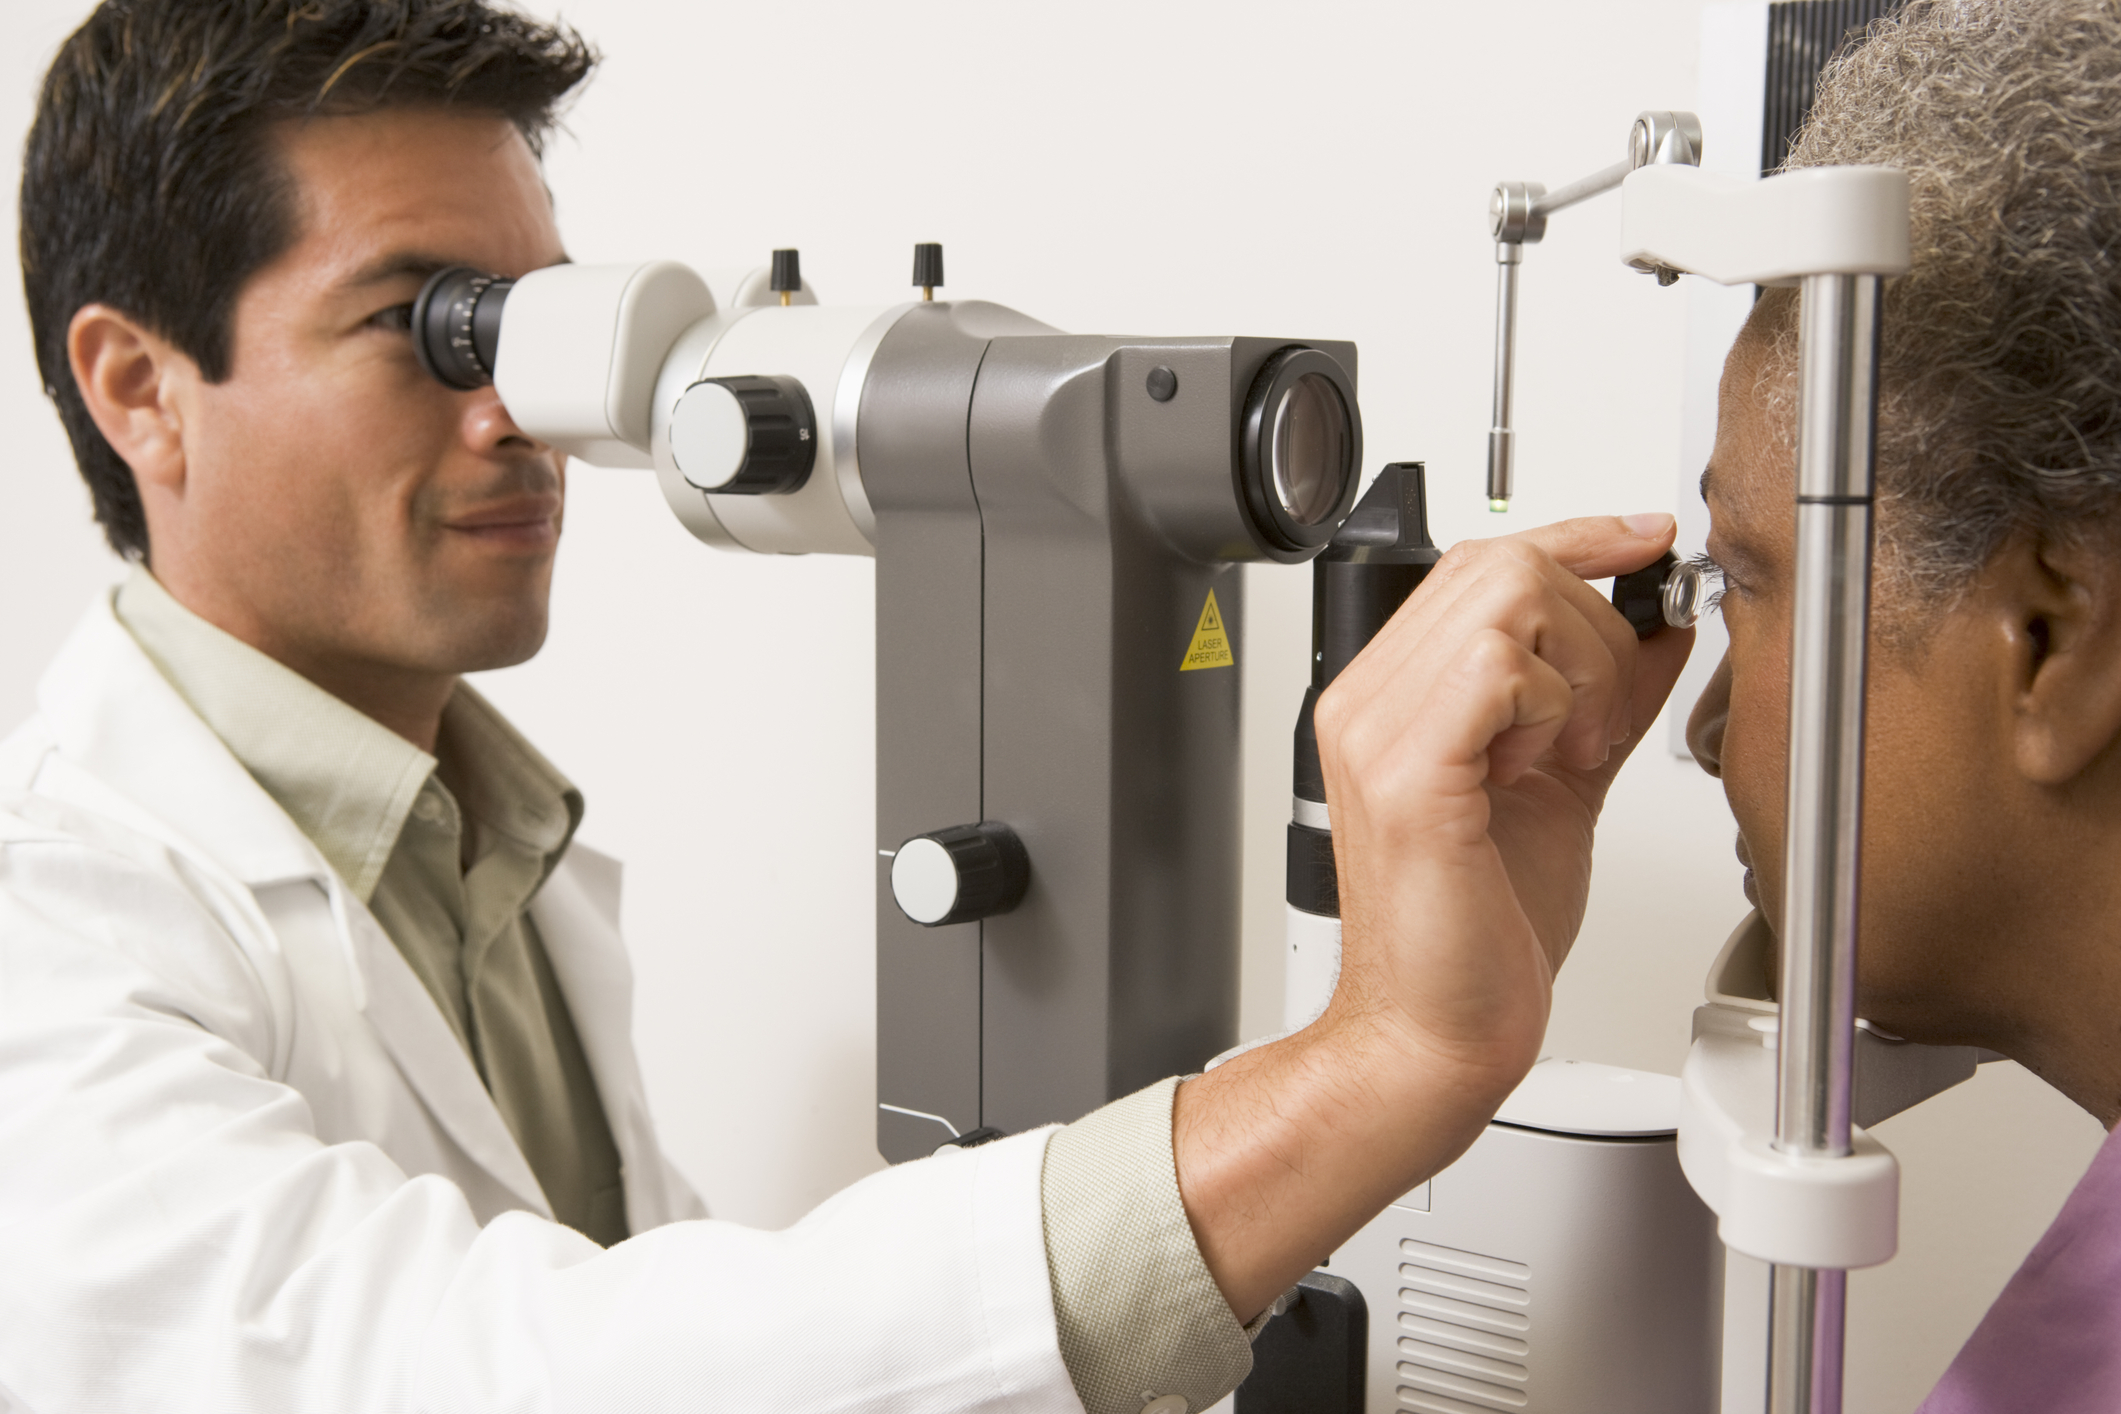 eye doctor using equipment to examine patient's eye.